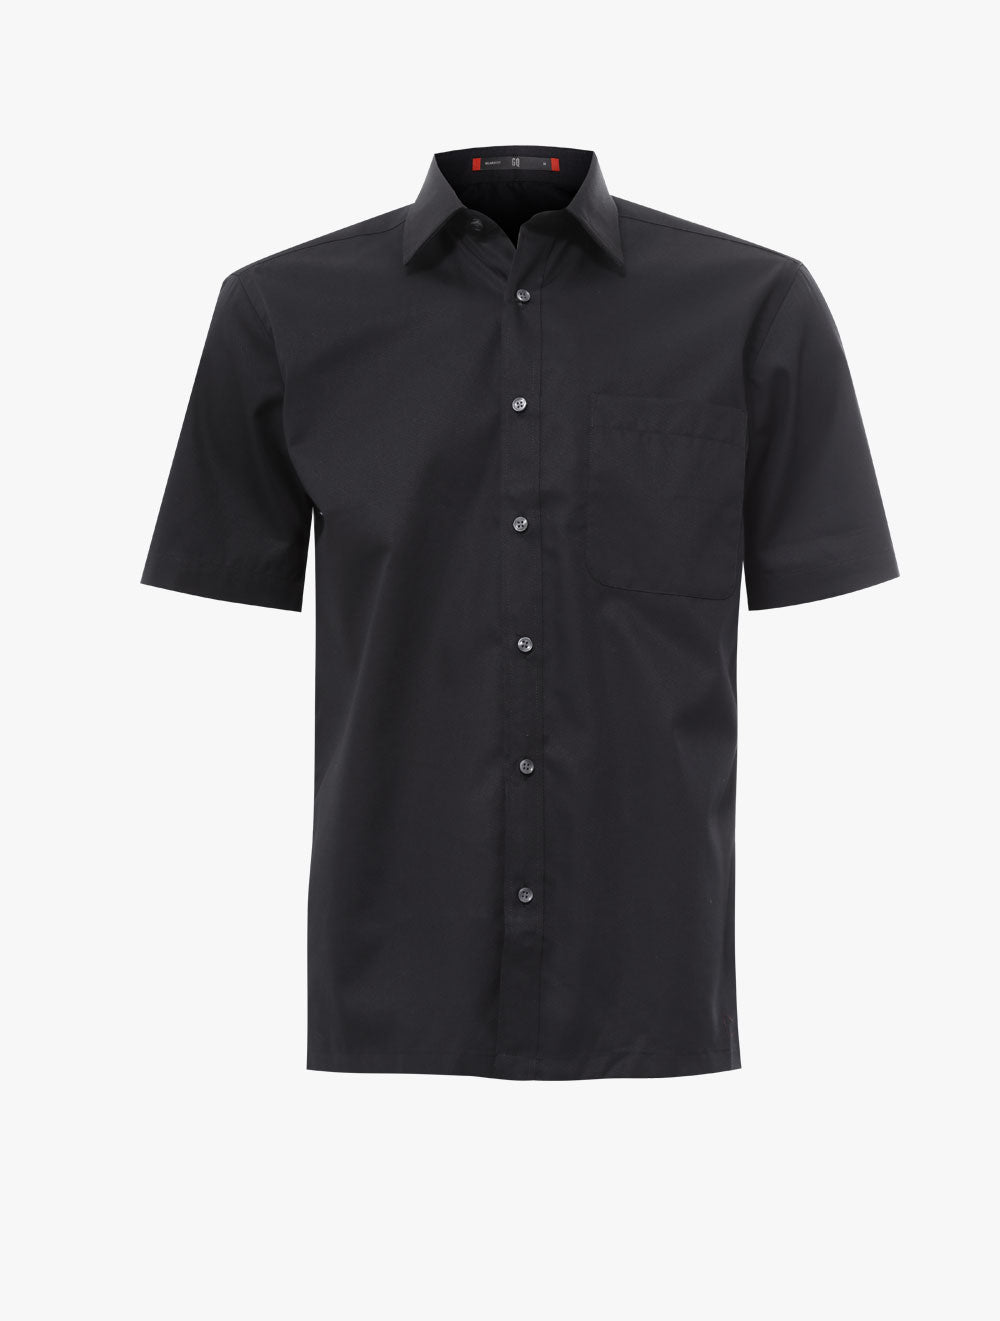 GQ
Casual Short Sleeve Shirt - 1623057